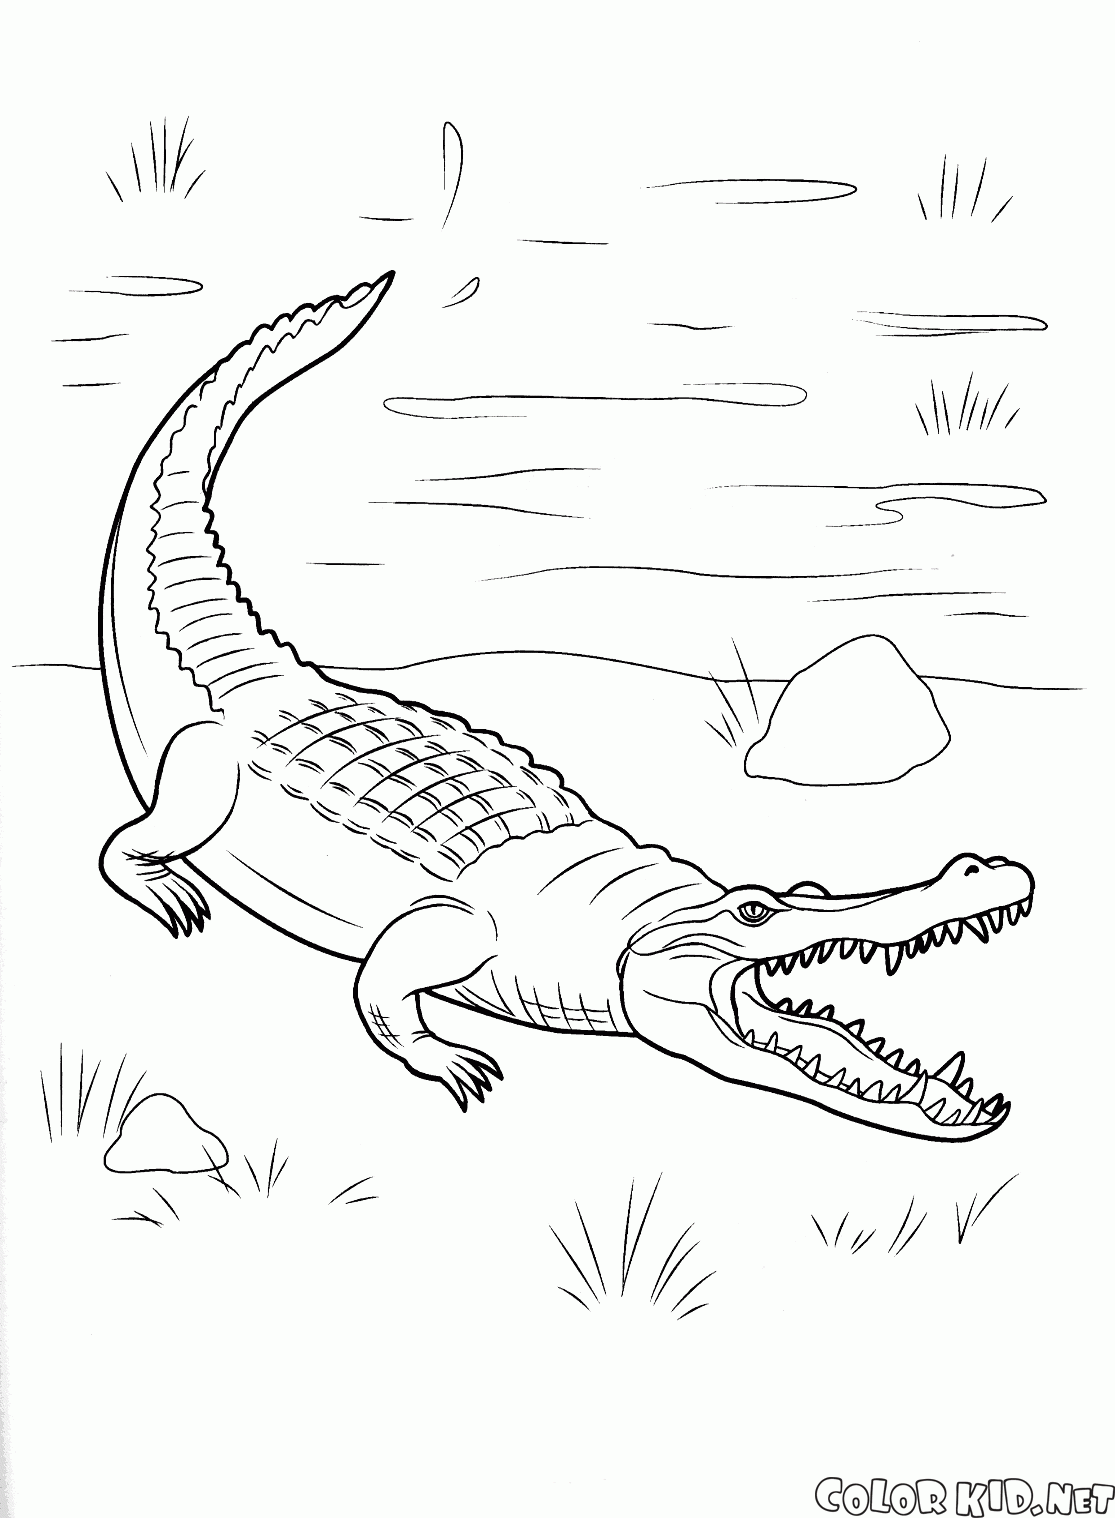 Крокодил вышел на сушу